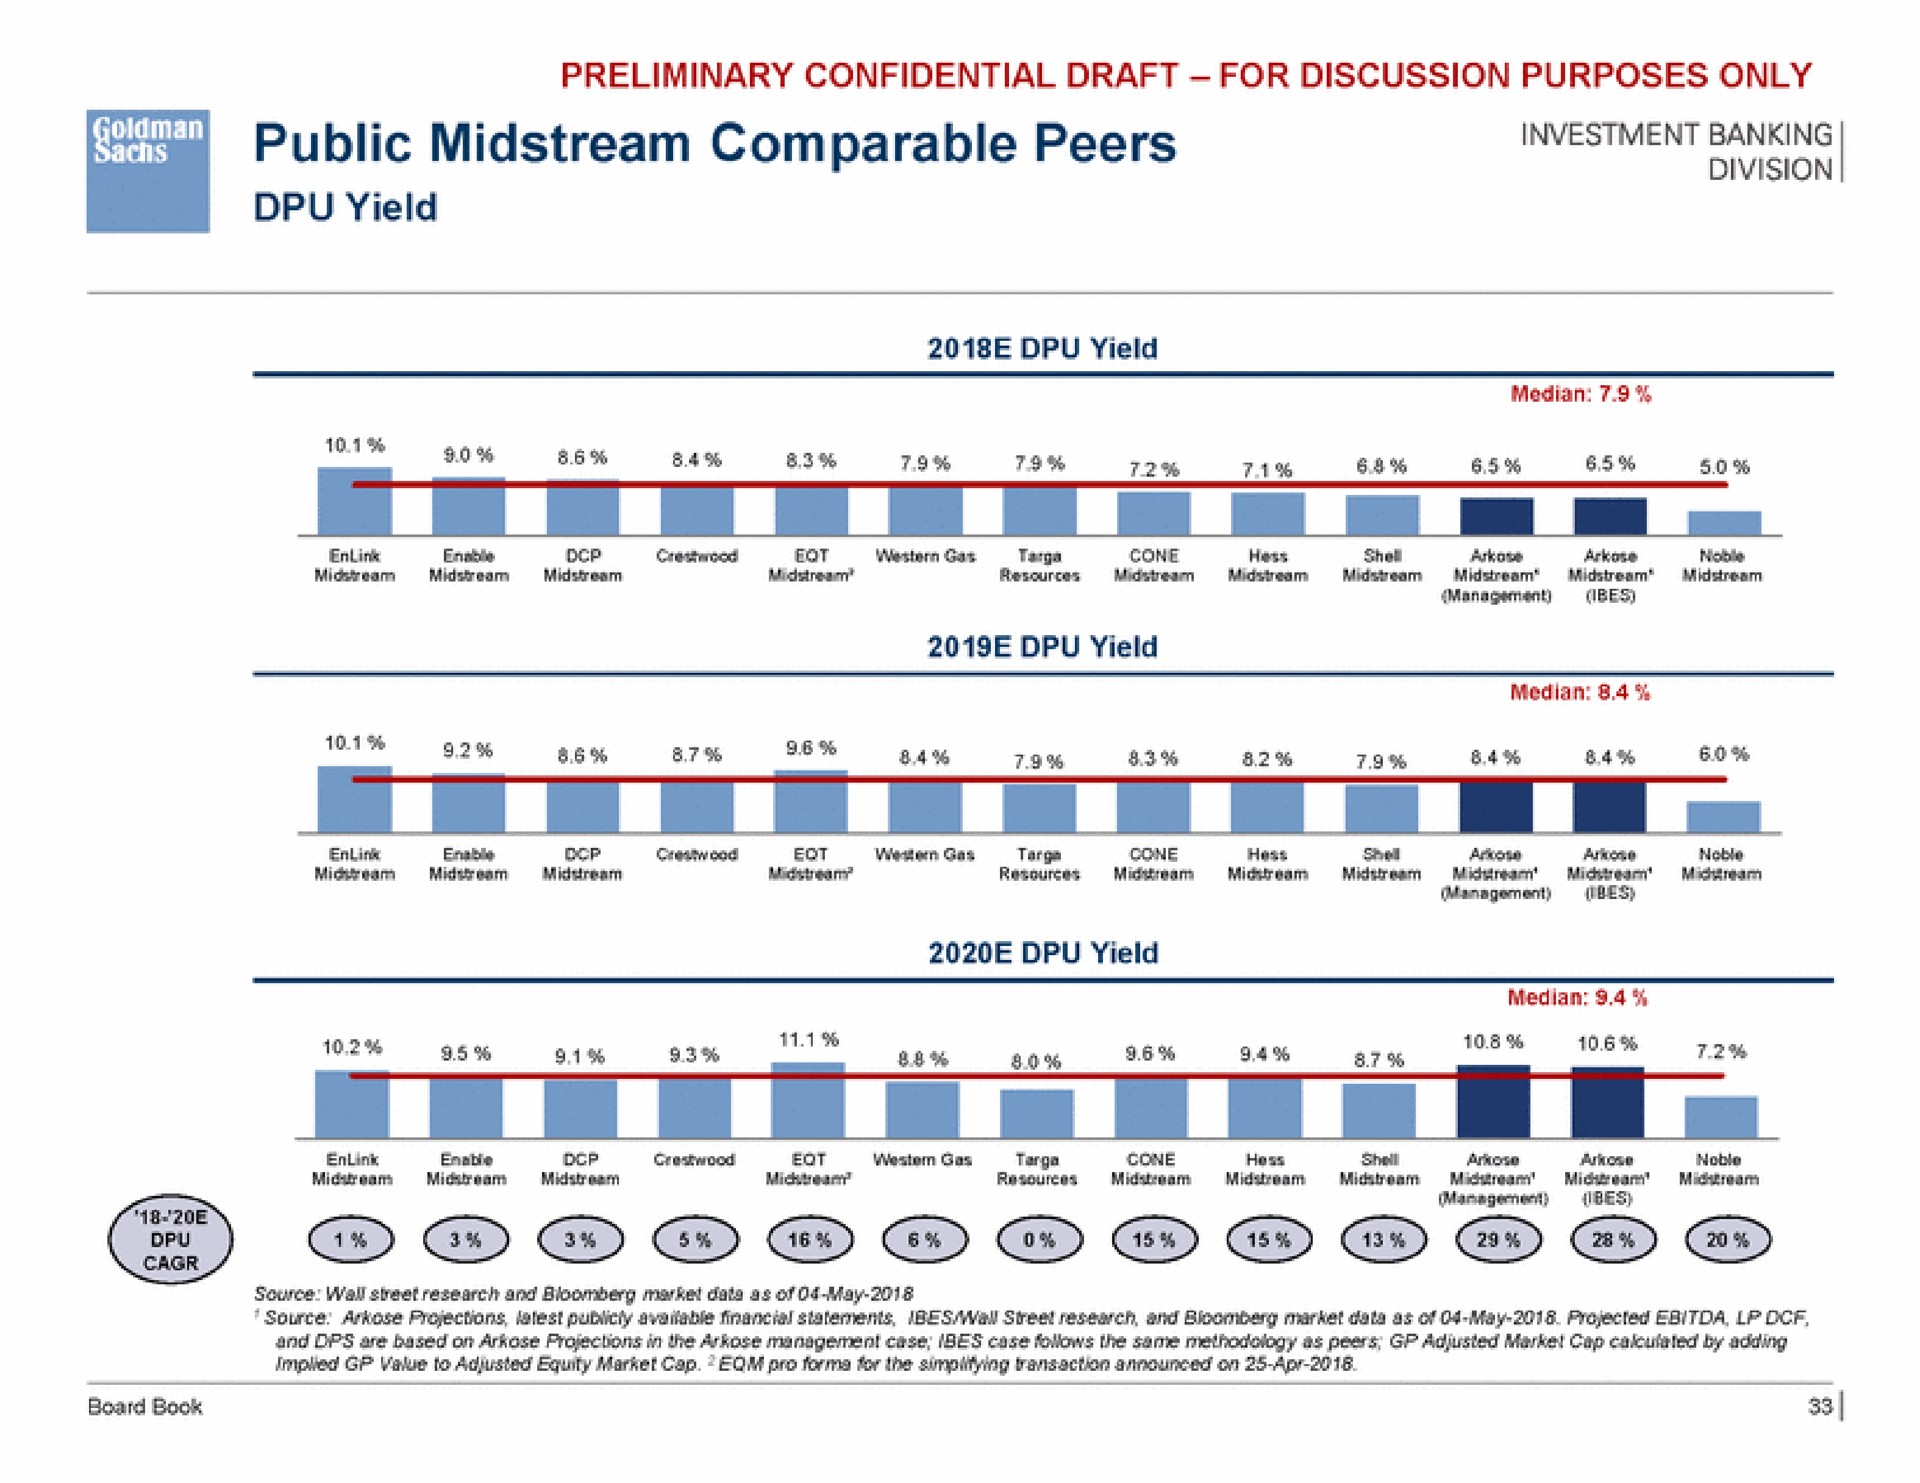 public midstream comparable peers | Goldman Sachs